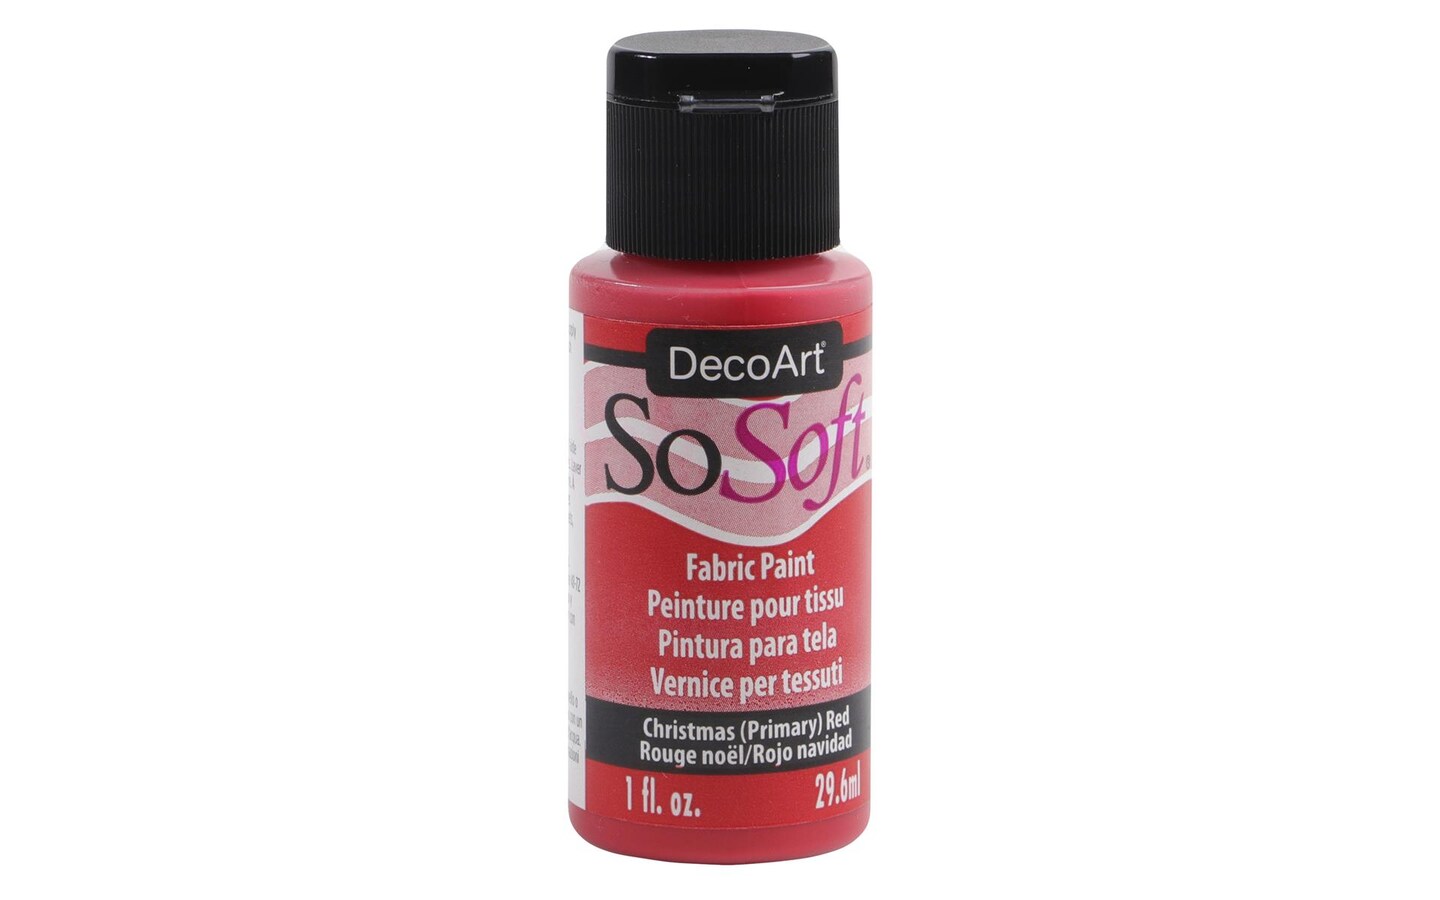 DecoArt SoSoft Fabric Paint 1 oz. - Christmas Red ⋆ Gina Reddin Designs